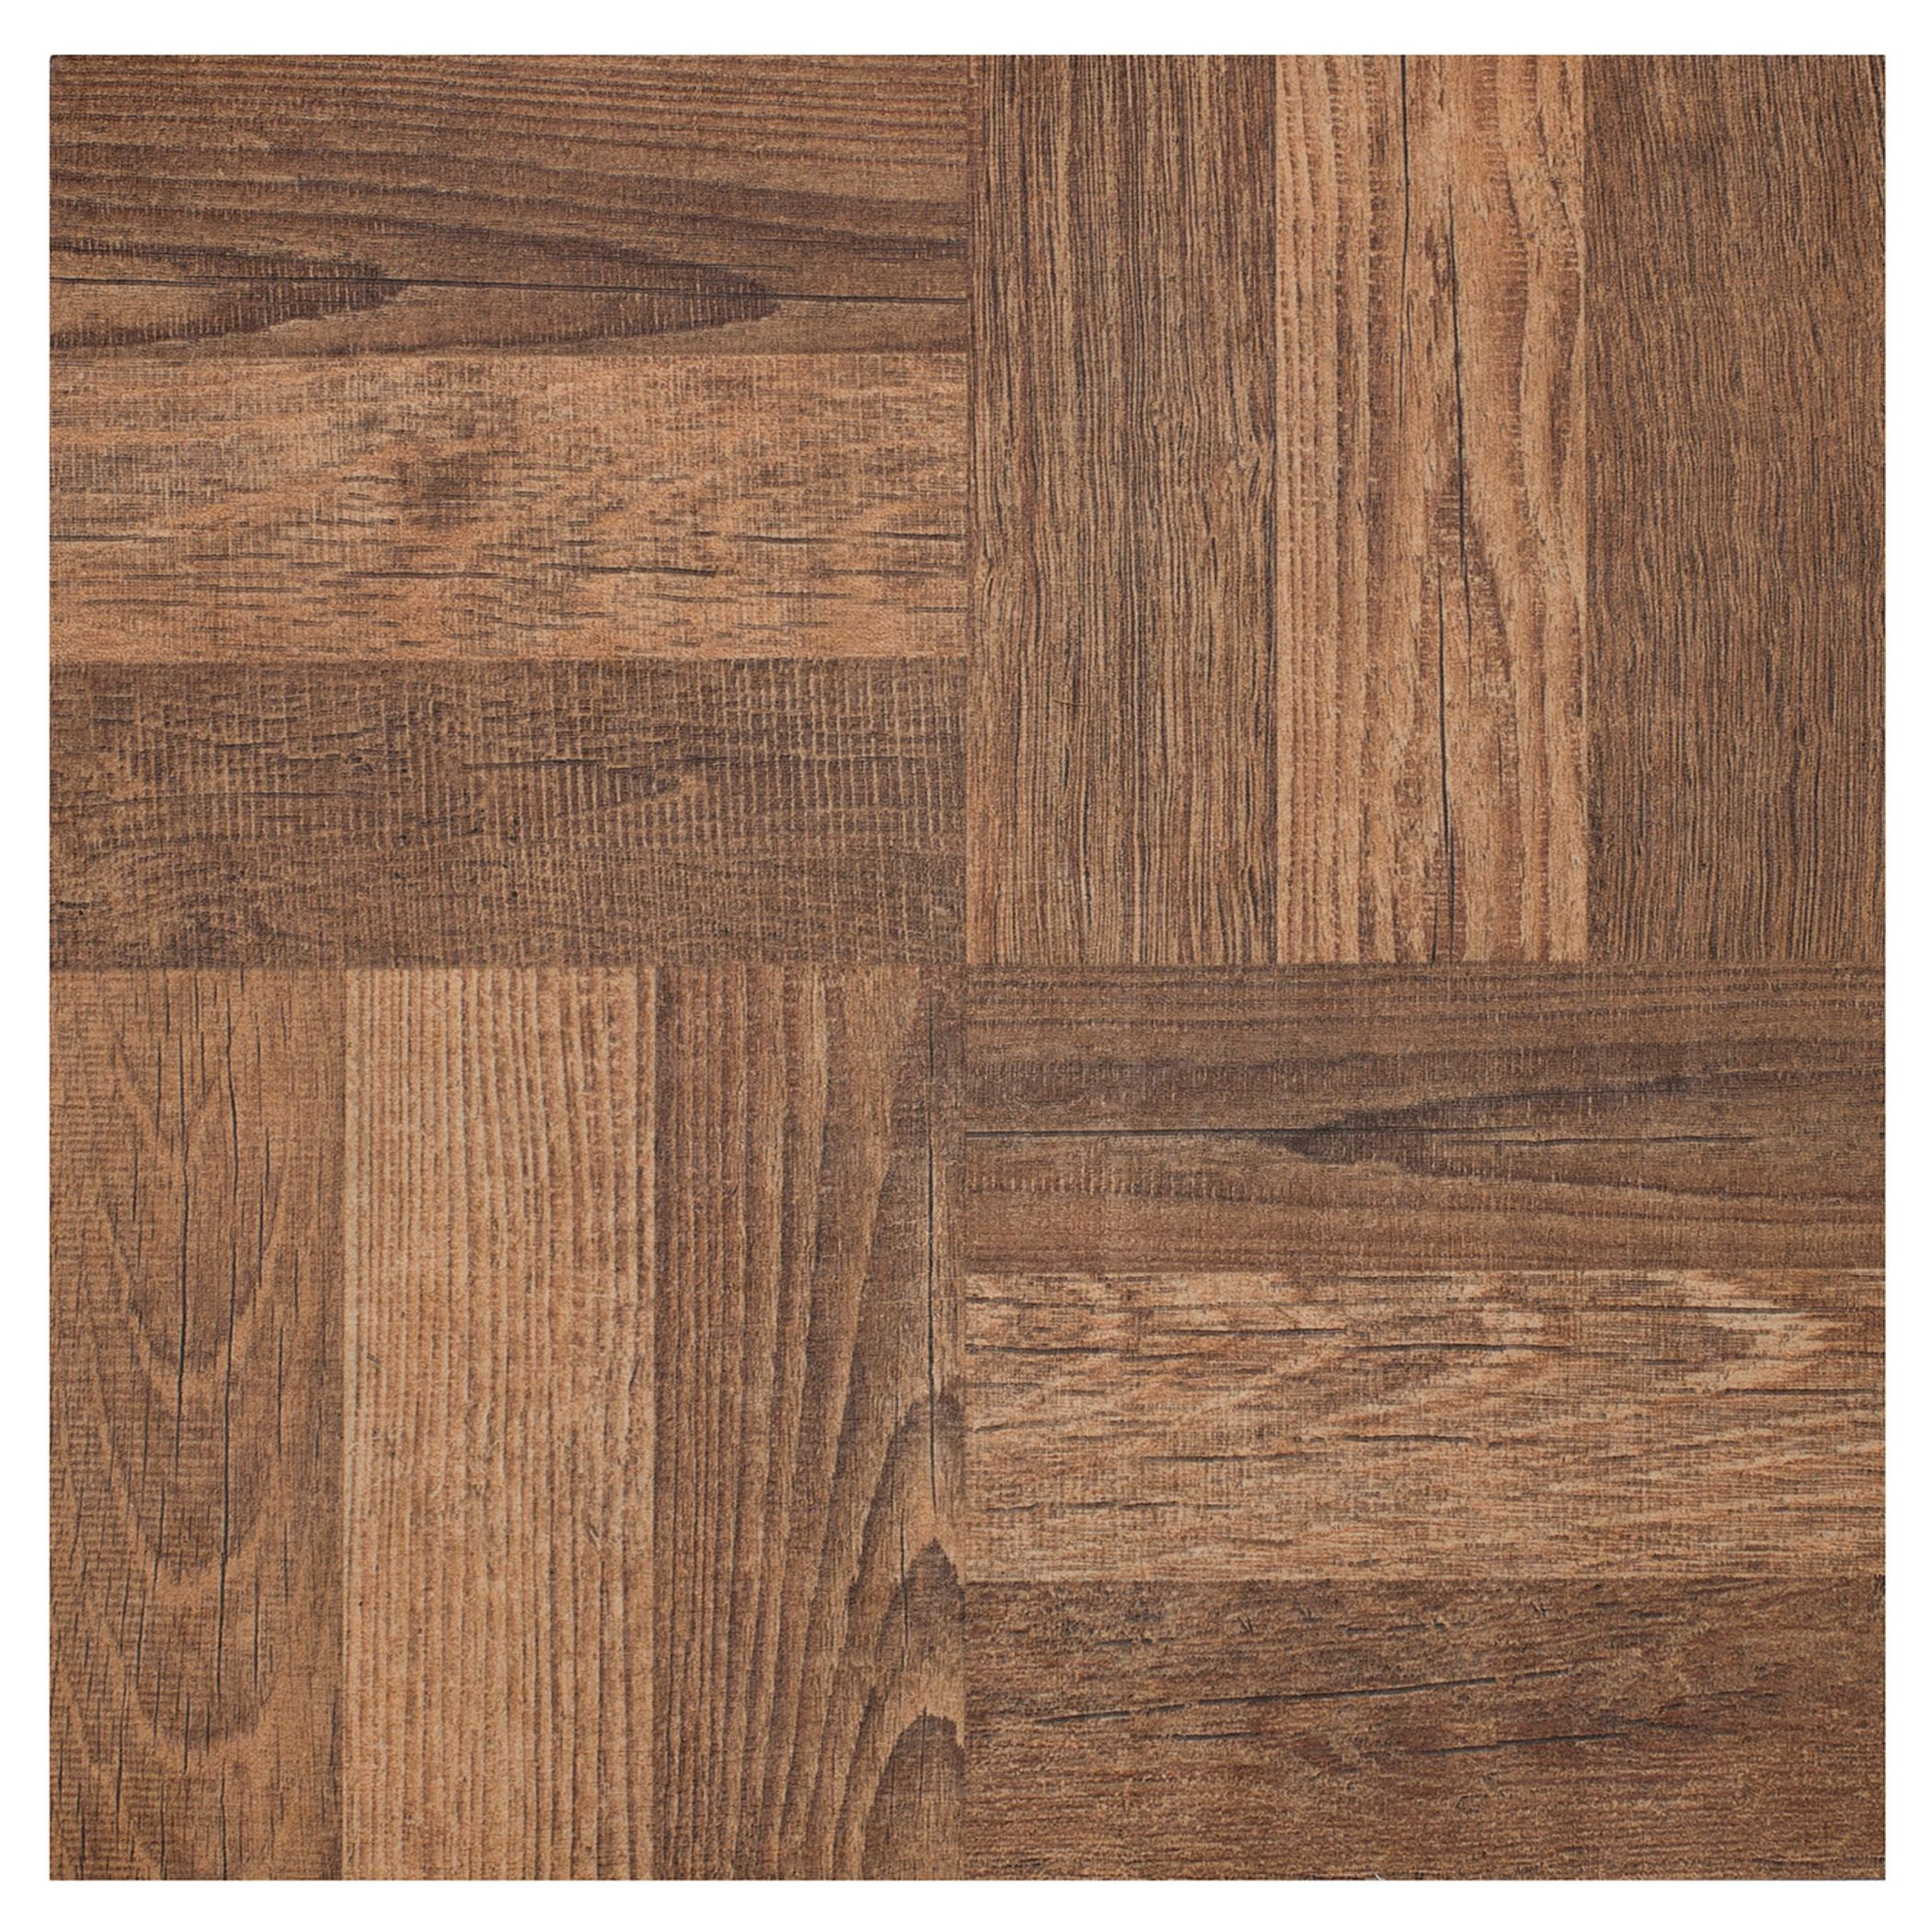 Ash - 24 sq ft//Pack 2.0mm Thick CO-Z 16 PCS//24 Square Feet Vinyl Floor Planks Adhesive Floor Tiles